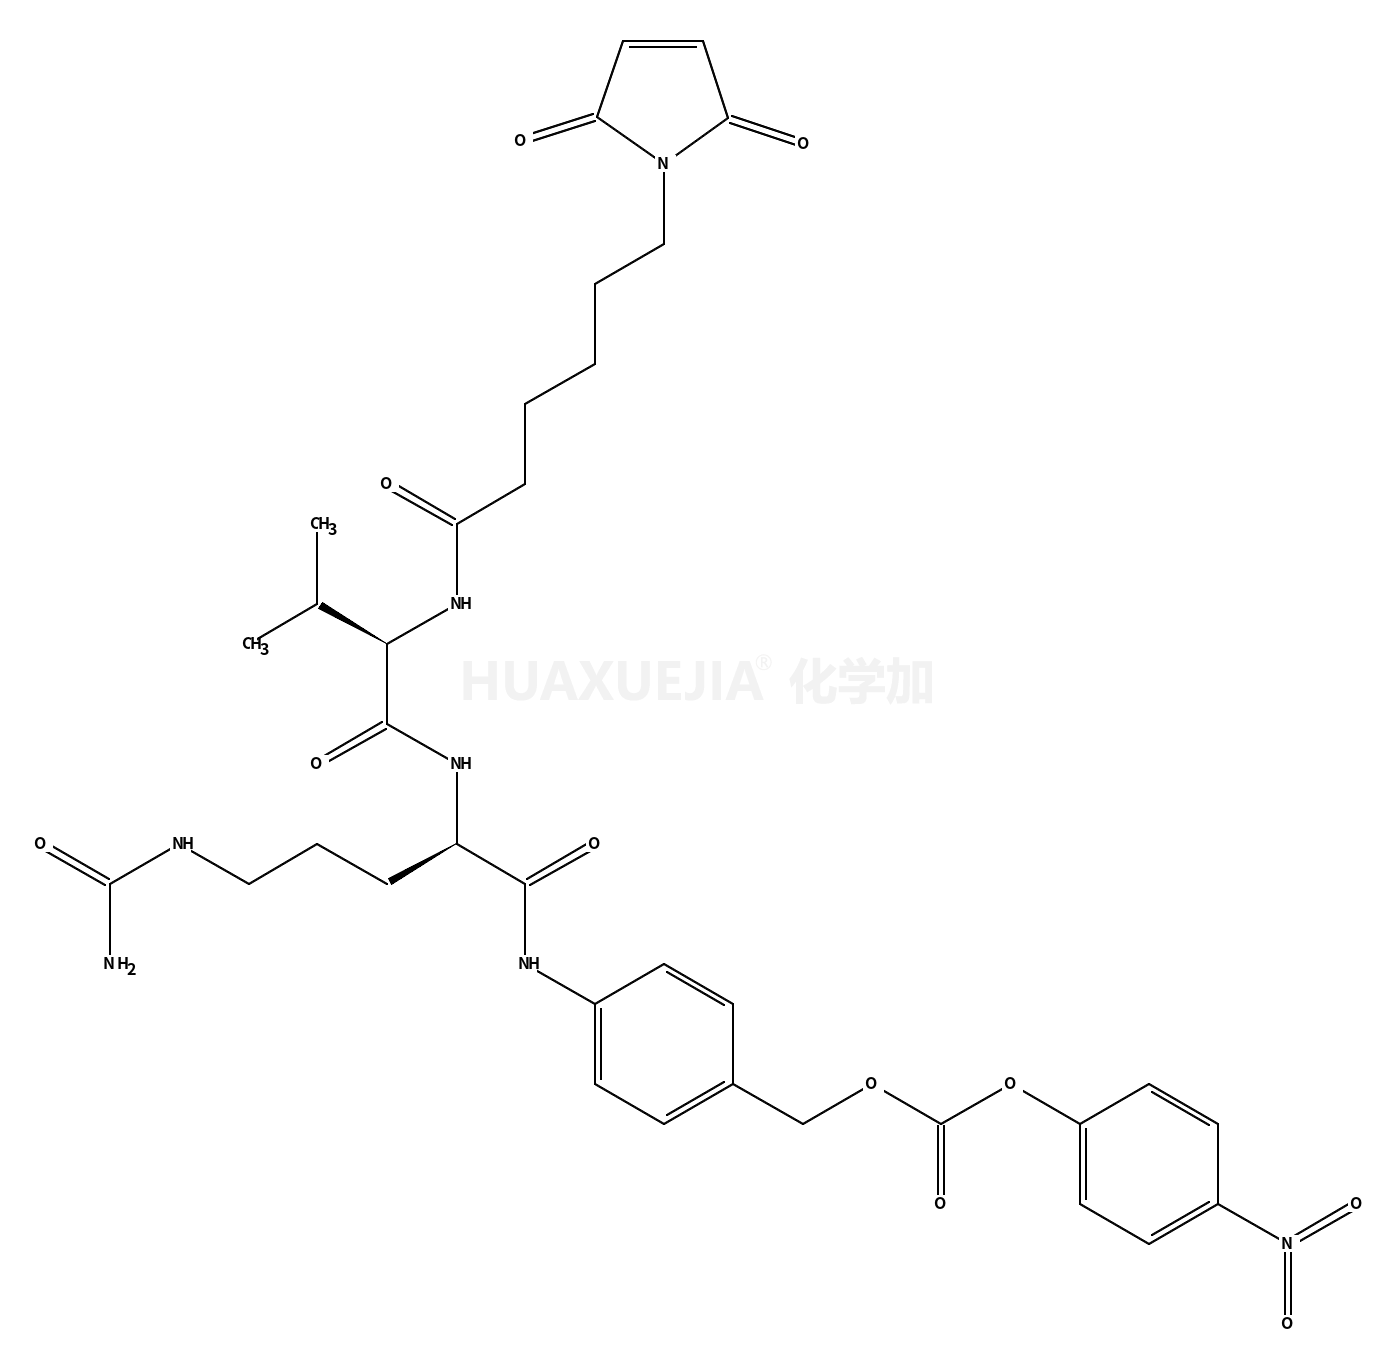 Dolastoxin intermediates 9